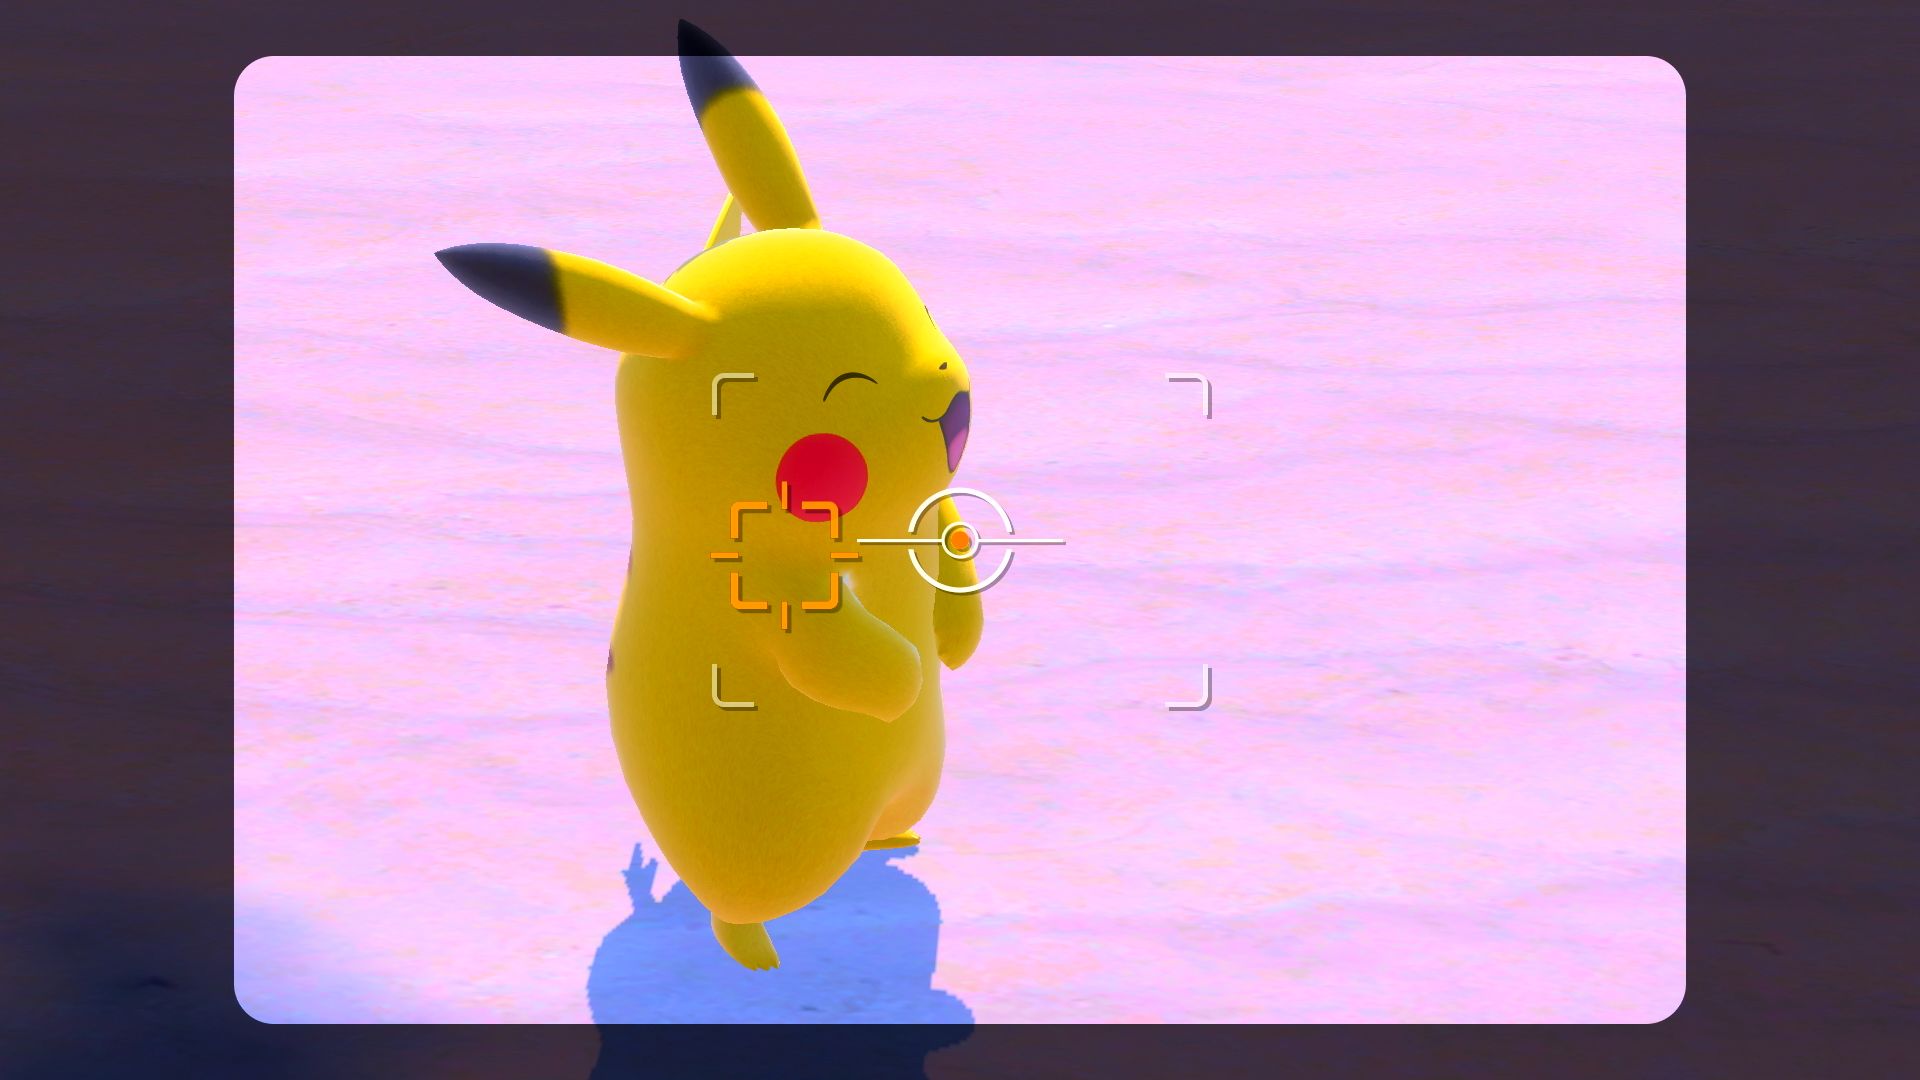 new pokemon snap screenshot 8